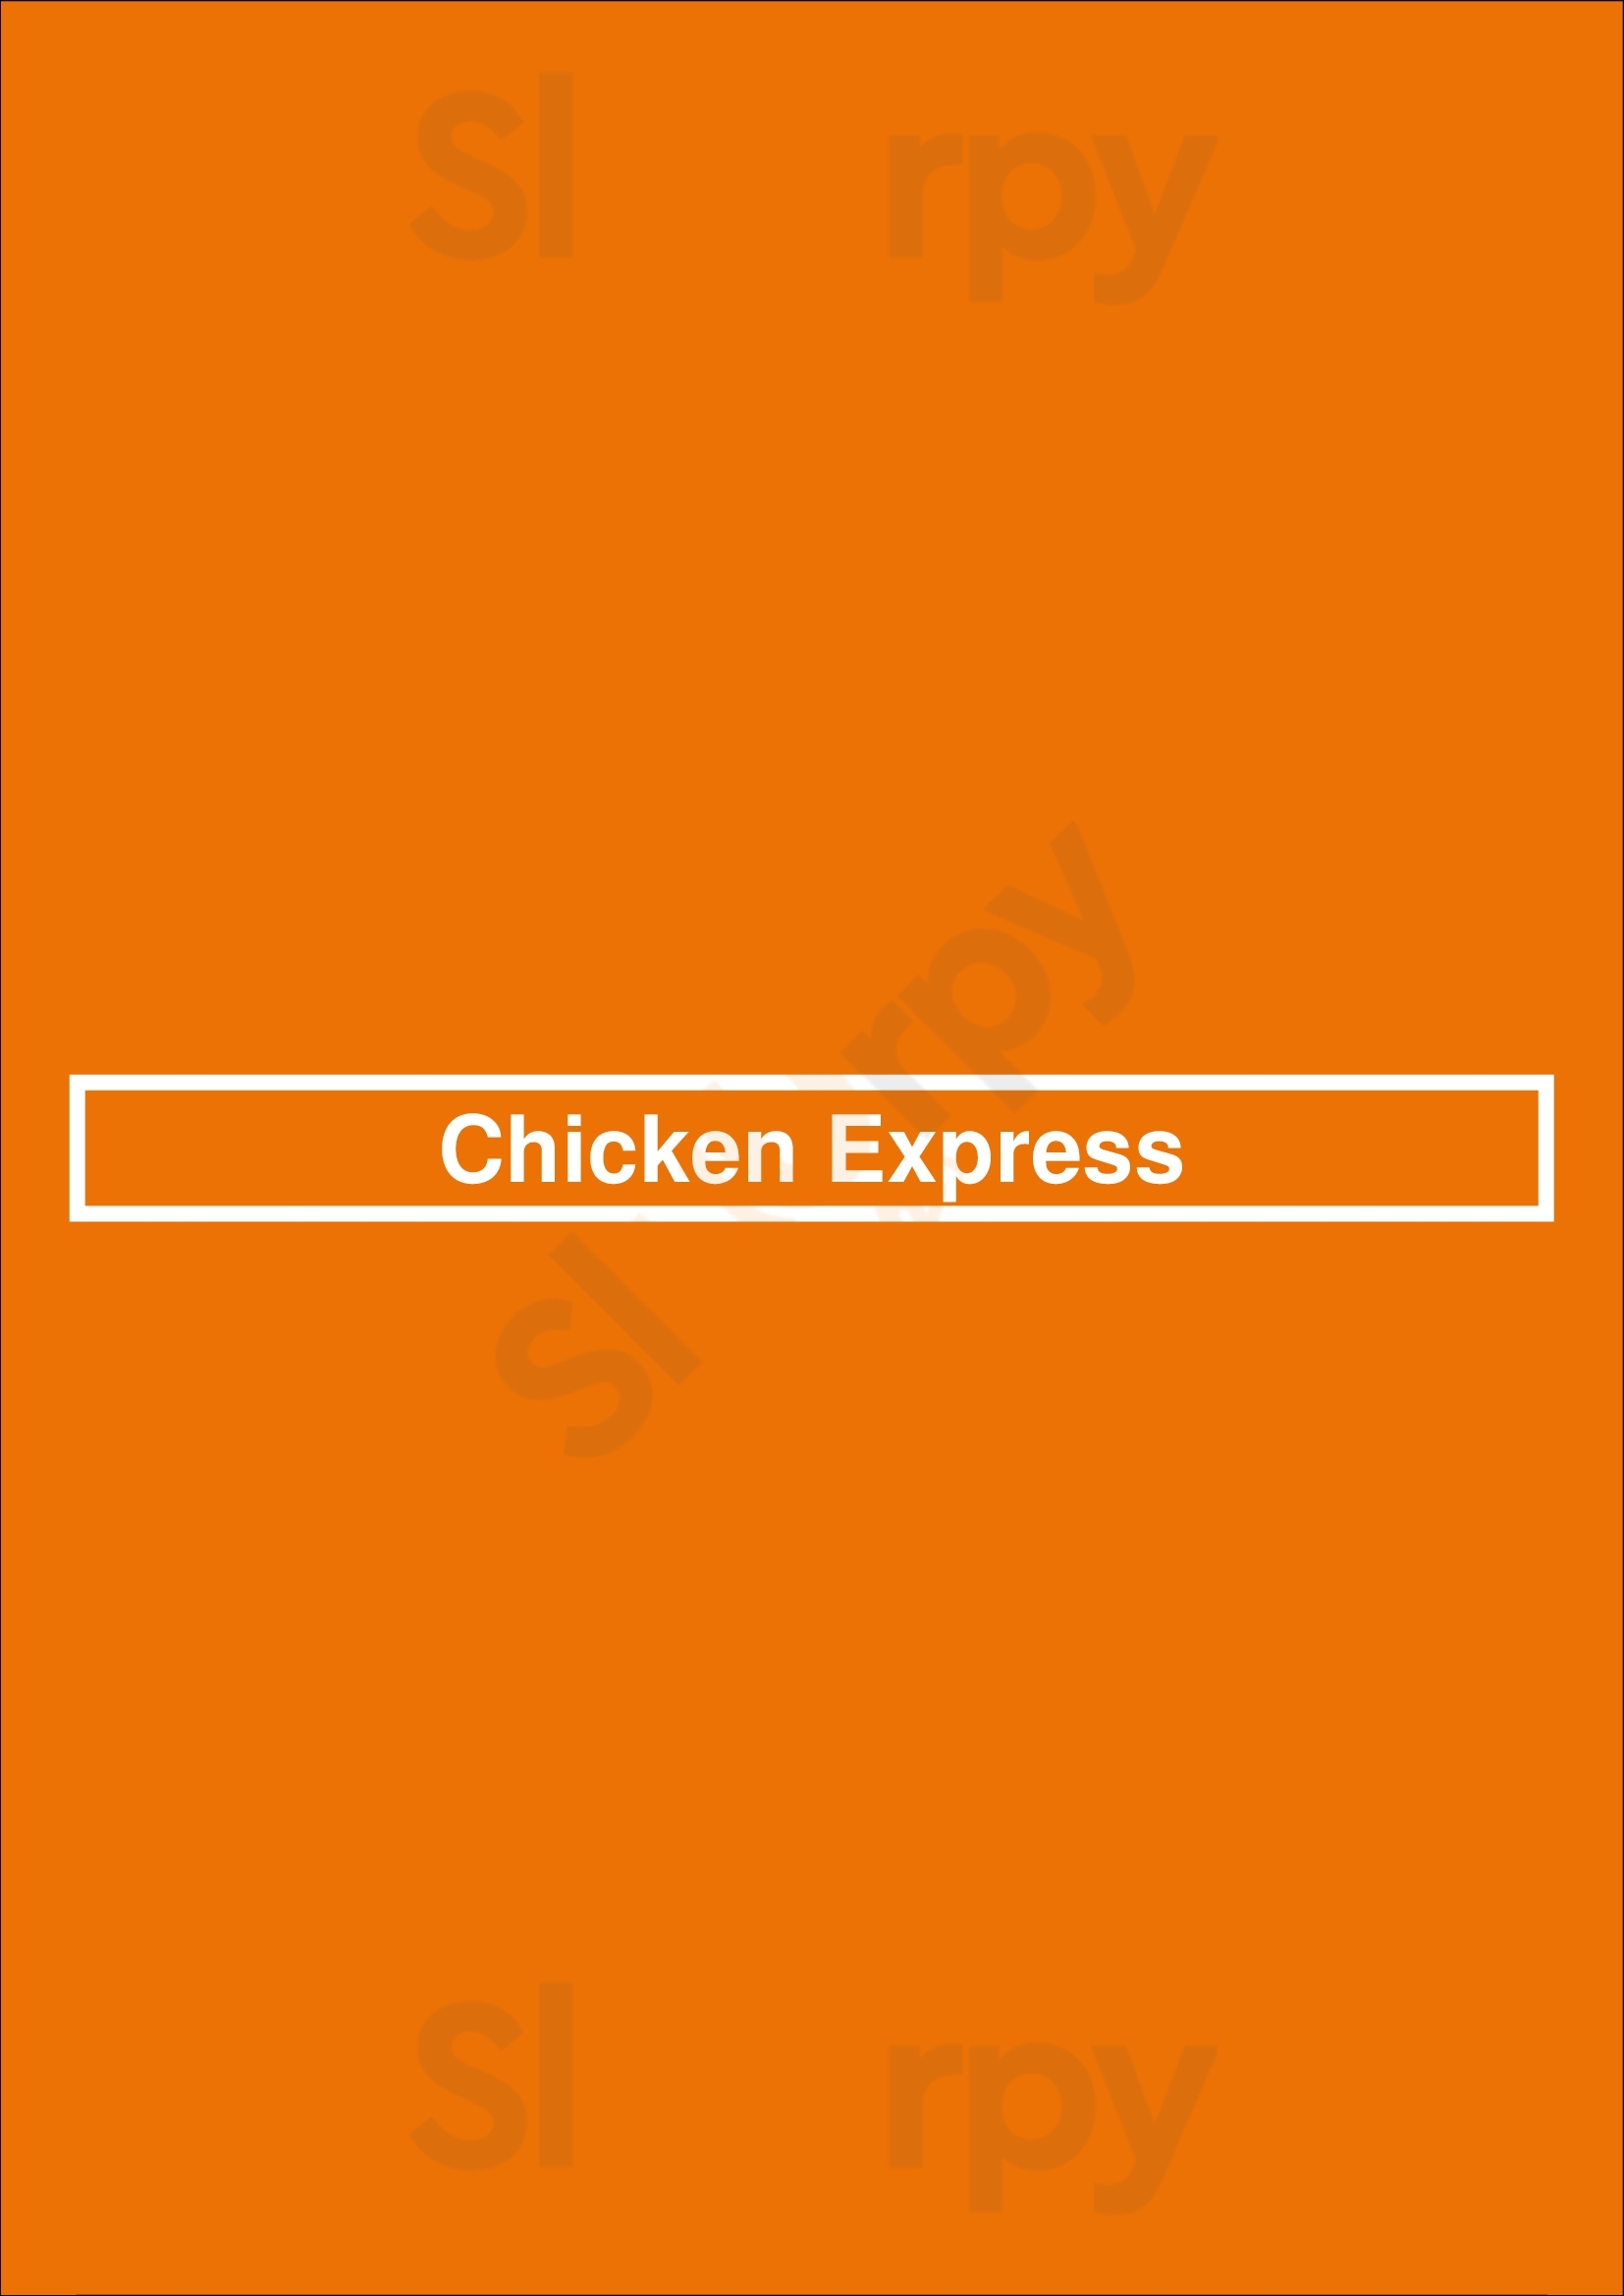 Chicken Express London Menu - 1